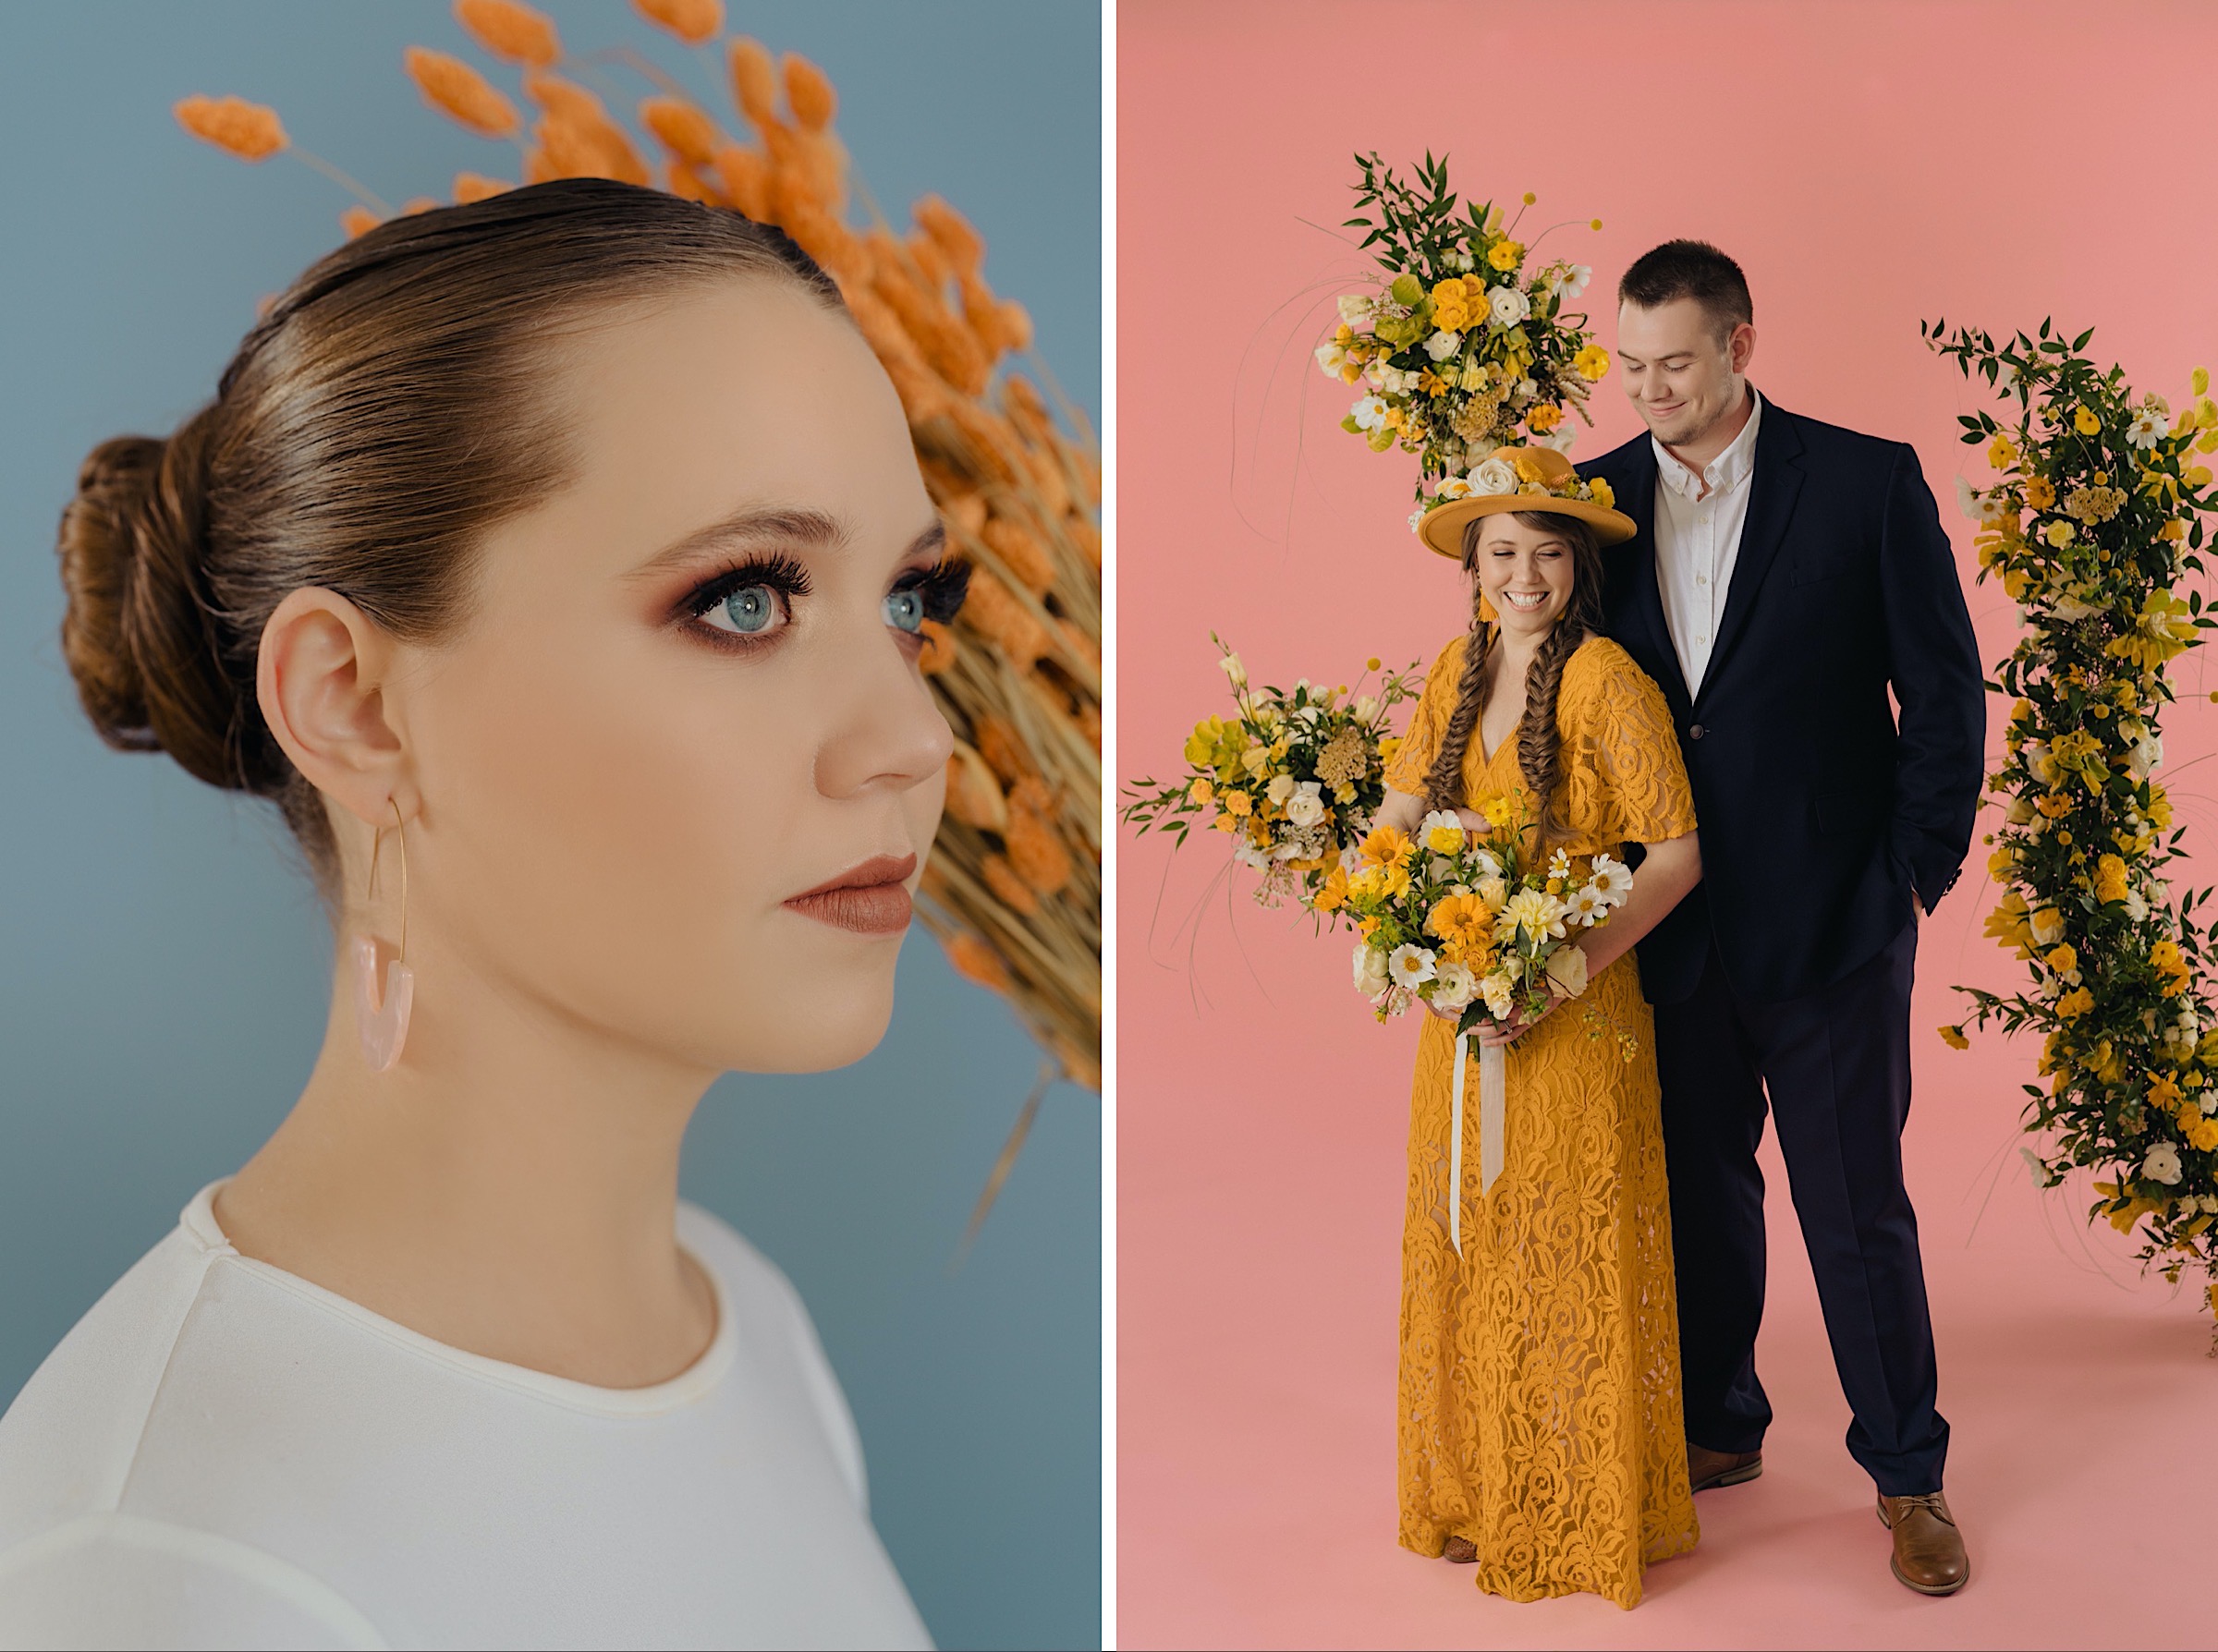 styled-wedding-shoot-modern-yellow-background-blue-floral-installation-colorful-sleek-wedding-dress-flower-open-back